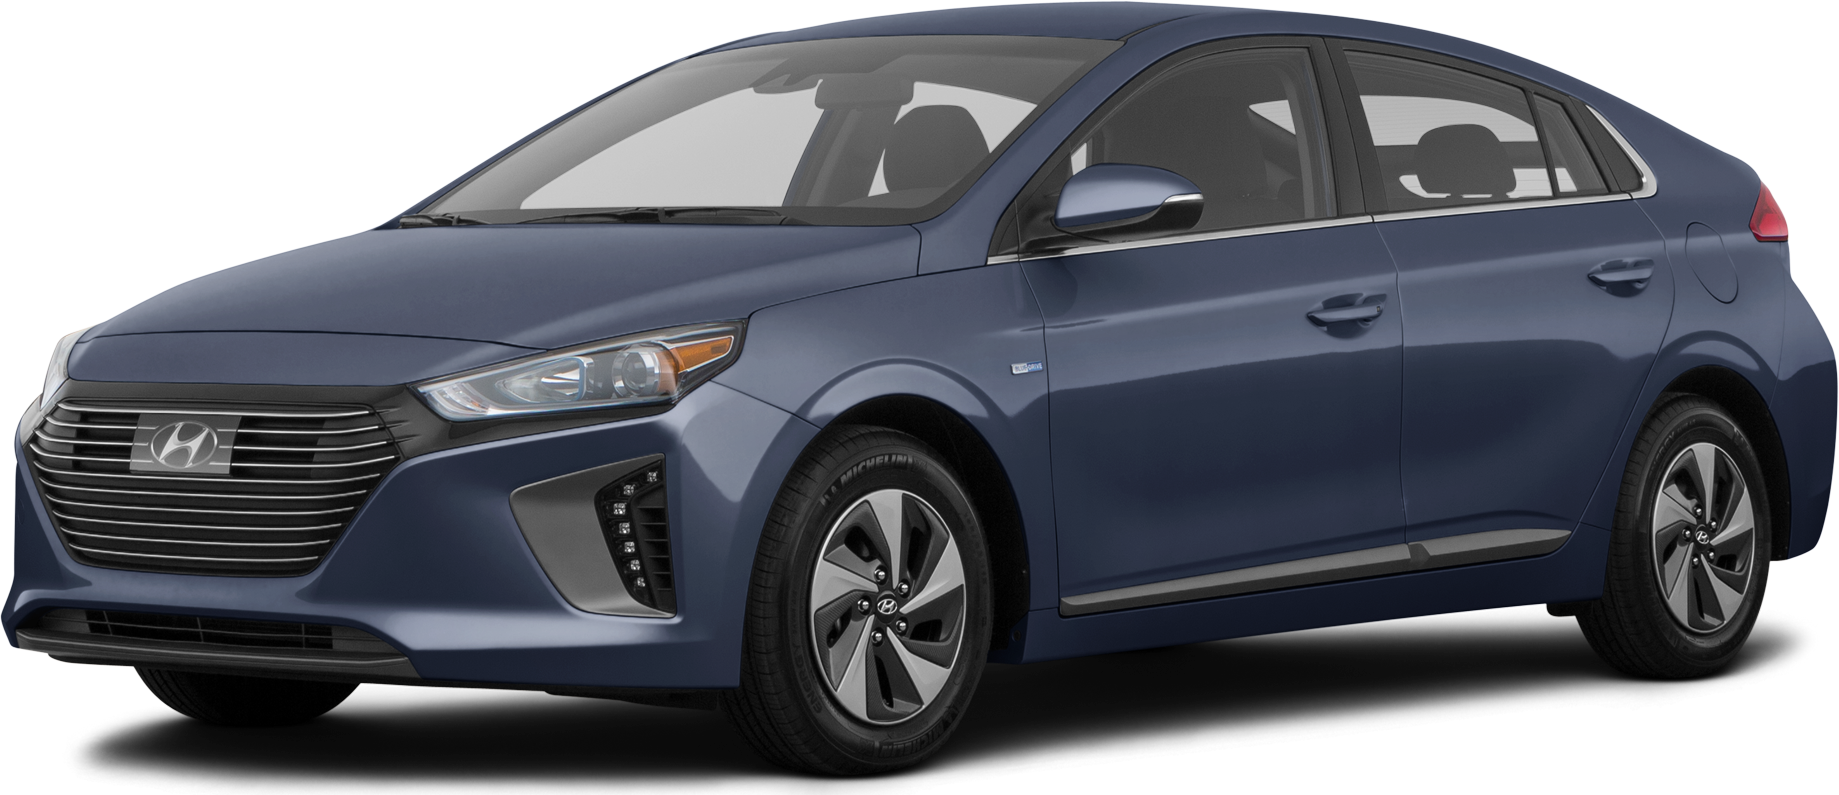 2017 Hyundai Ioniq Electric Price, Value, Ratings & Reviews